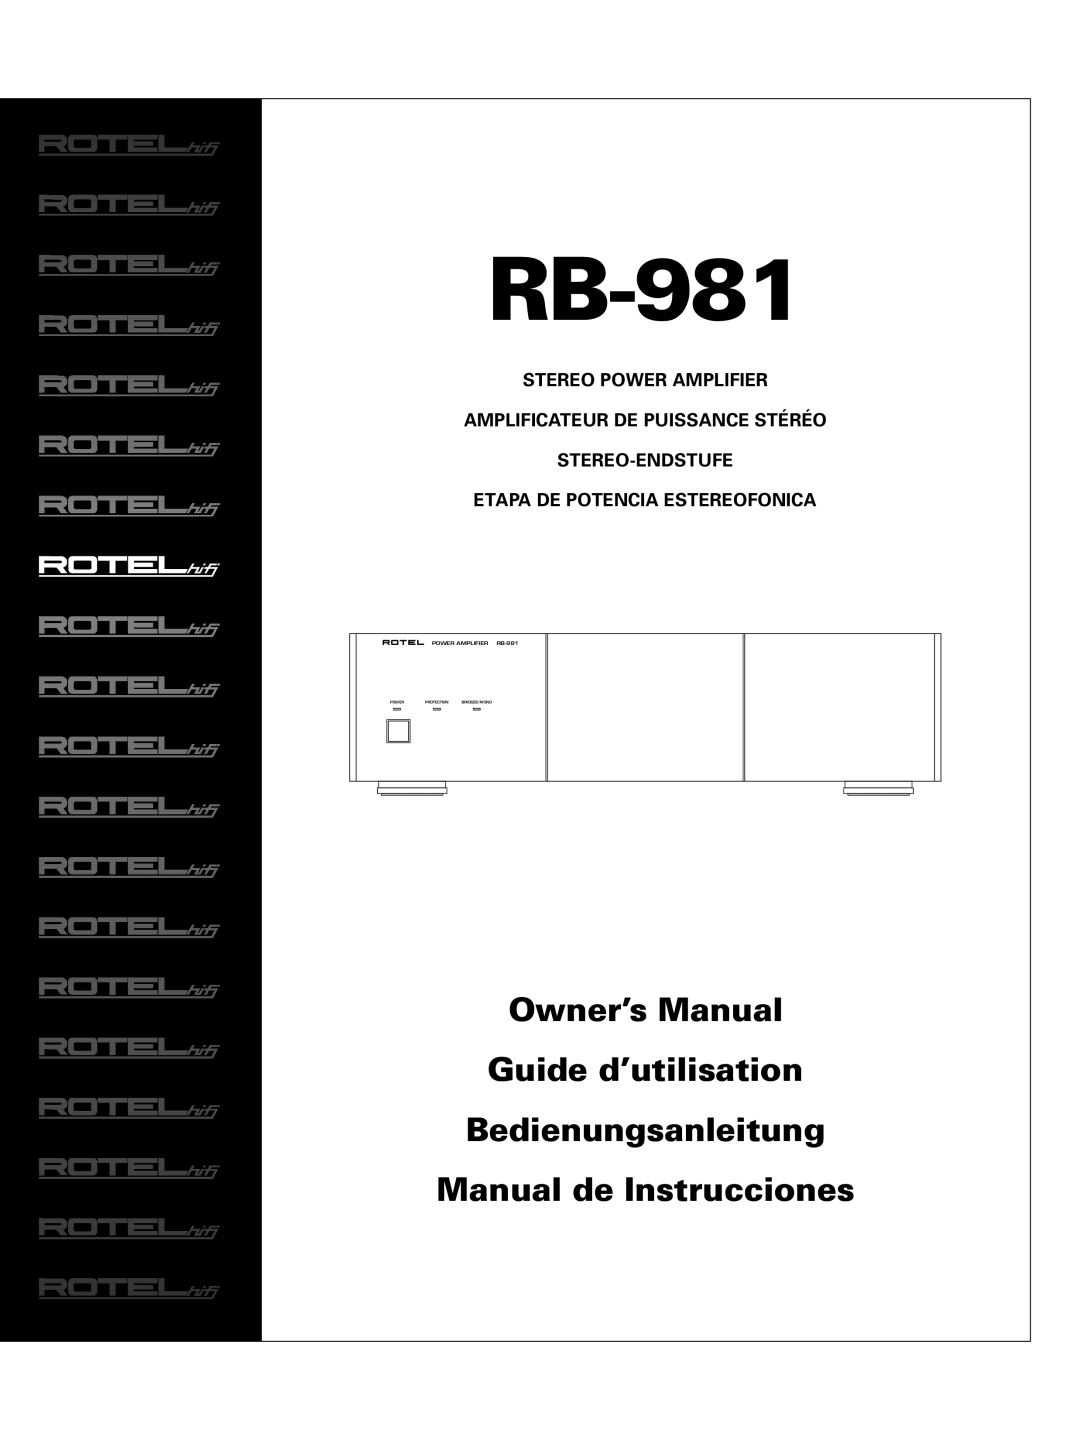 Rotel RB981 owner manual RB-981, Owner’s Manual Guide d’utilisation Bedienungsanleitung, Manual de Instrucciones 